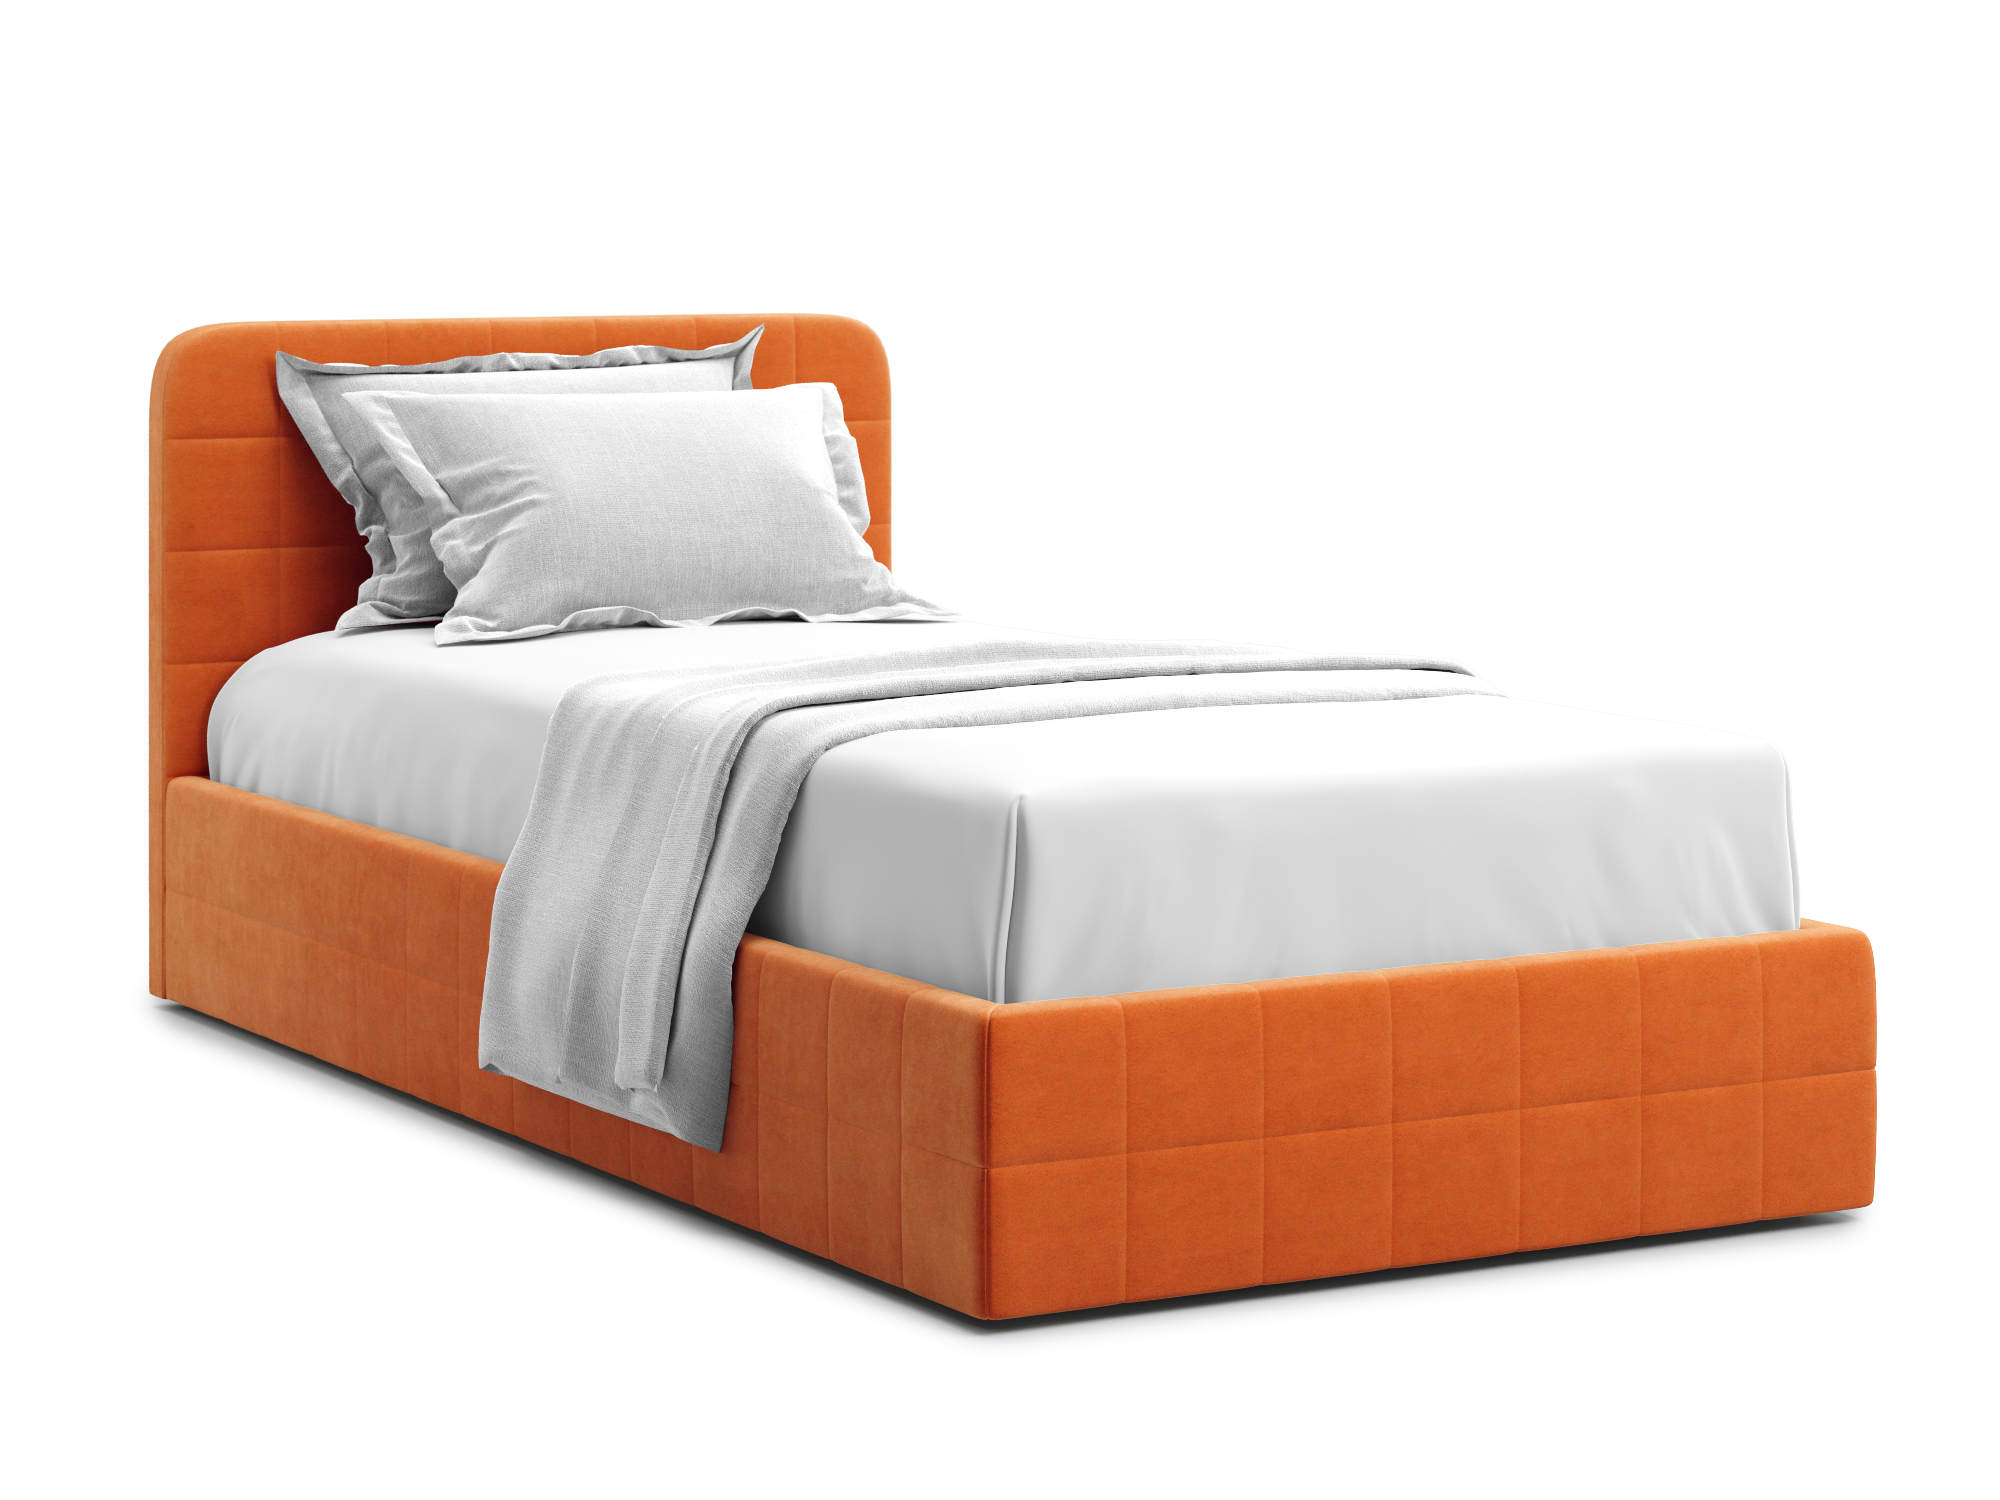 Кровать Adda 120 Velutto 27 Оранжевый, Массив, ДСП кровать adda 120 velutto 14 ментоловый массив дсп